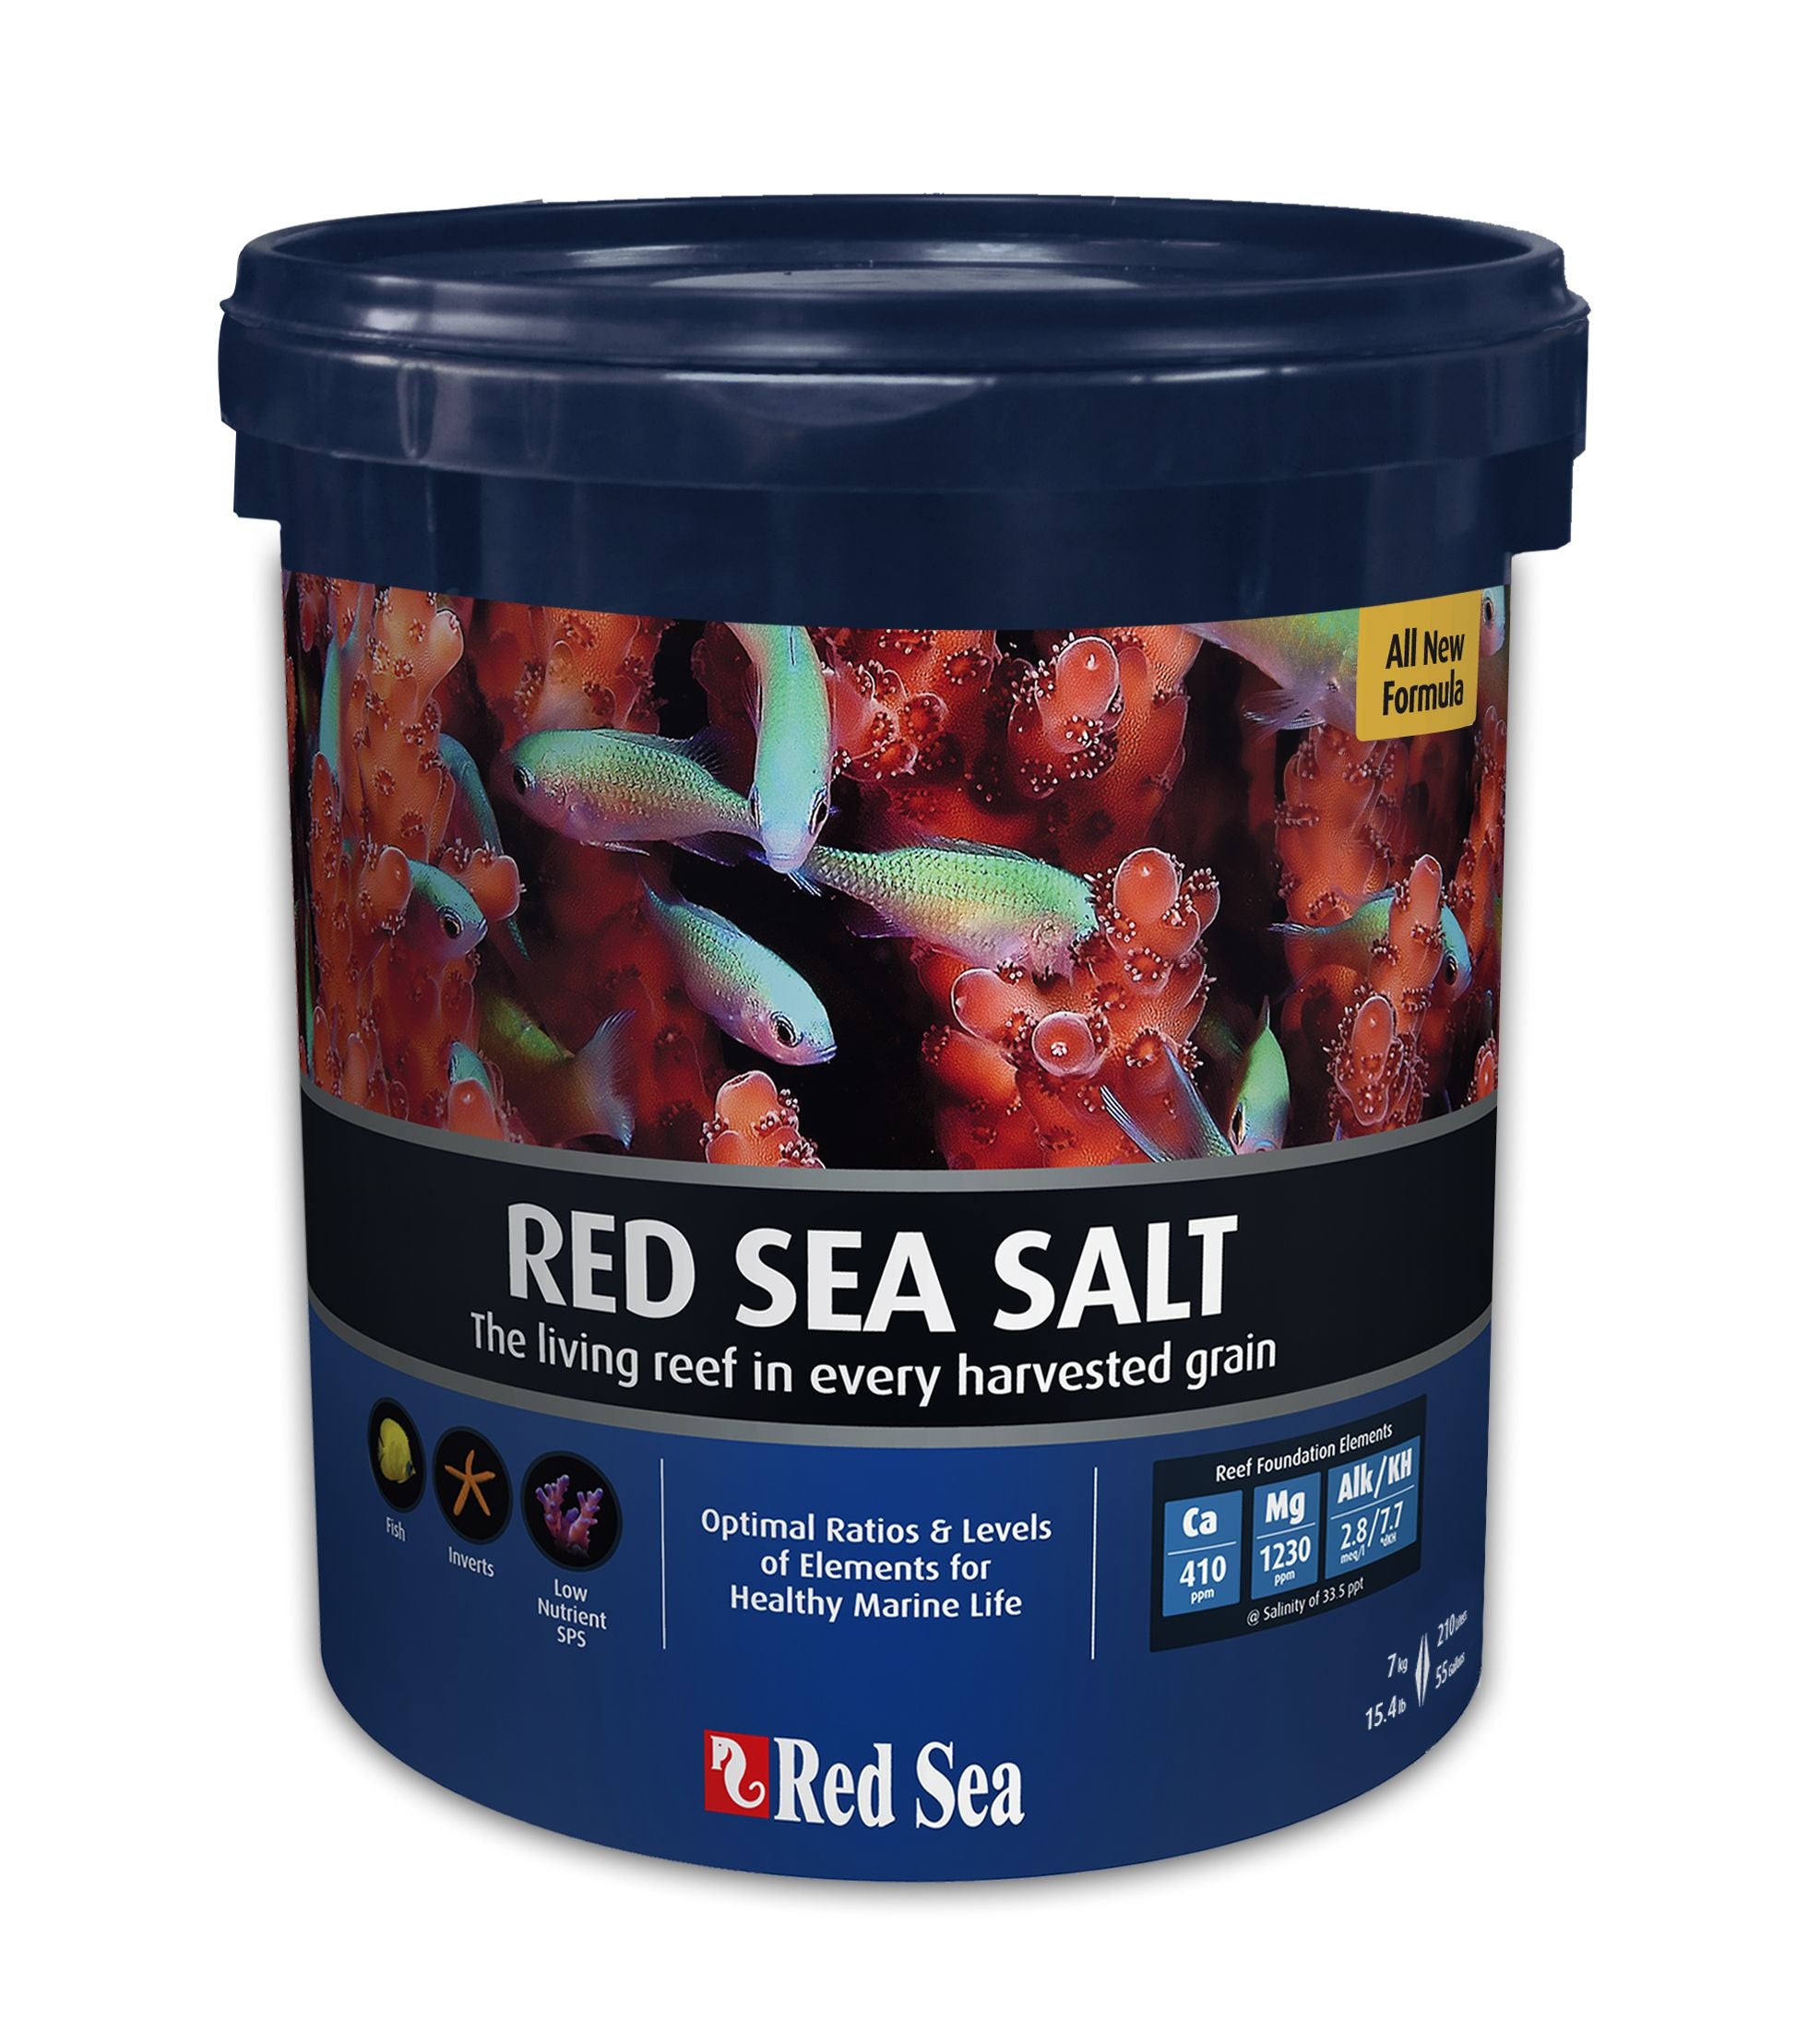 Red sea salt 7kg bucket